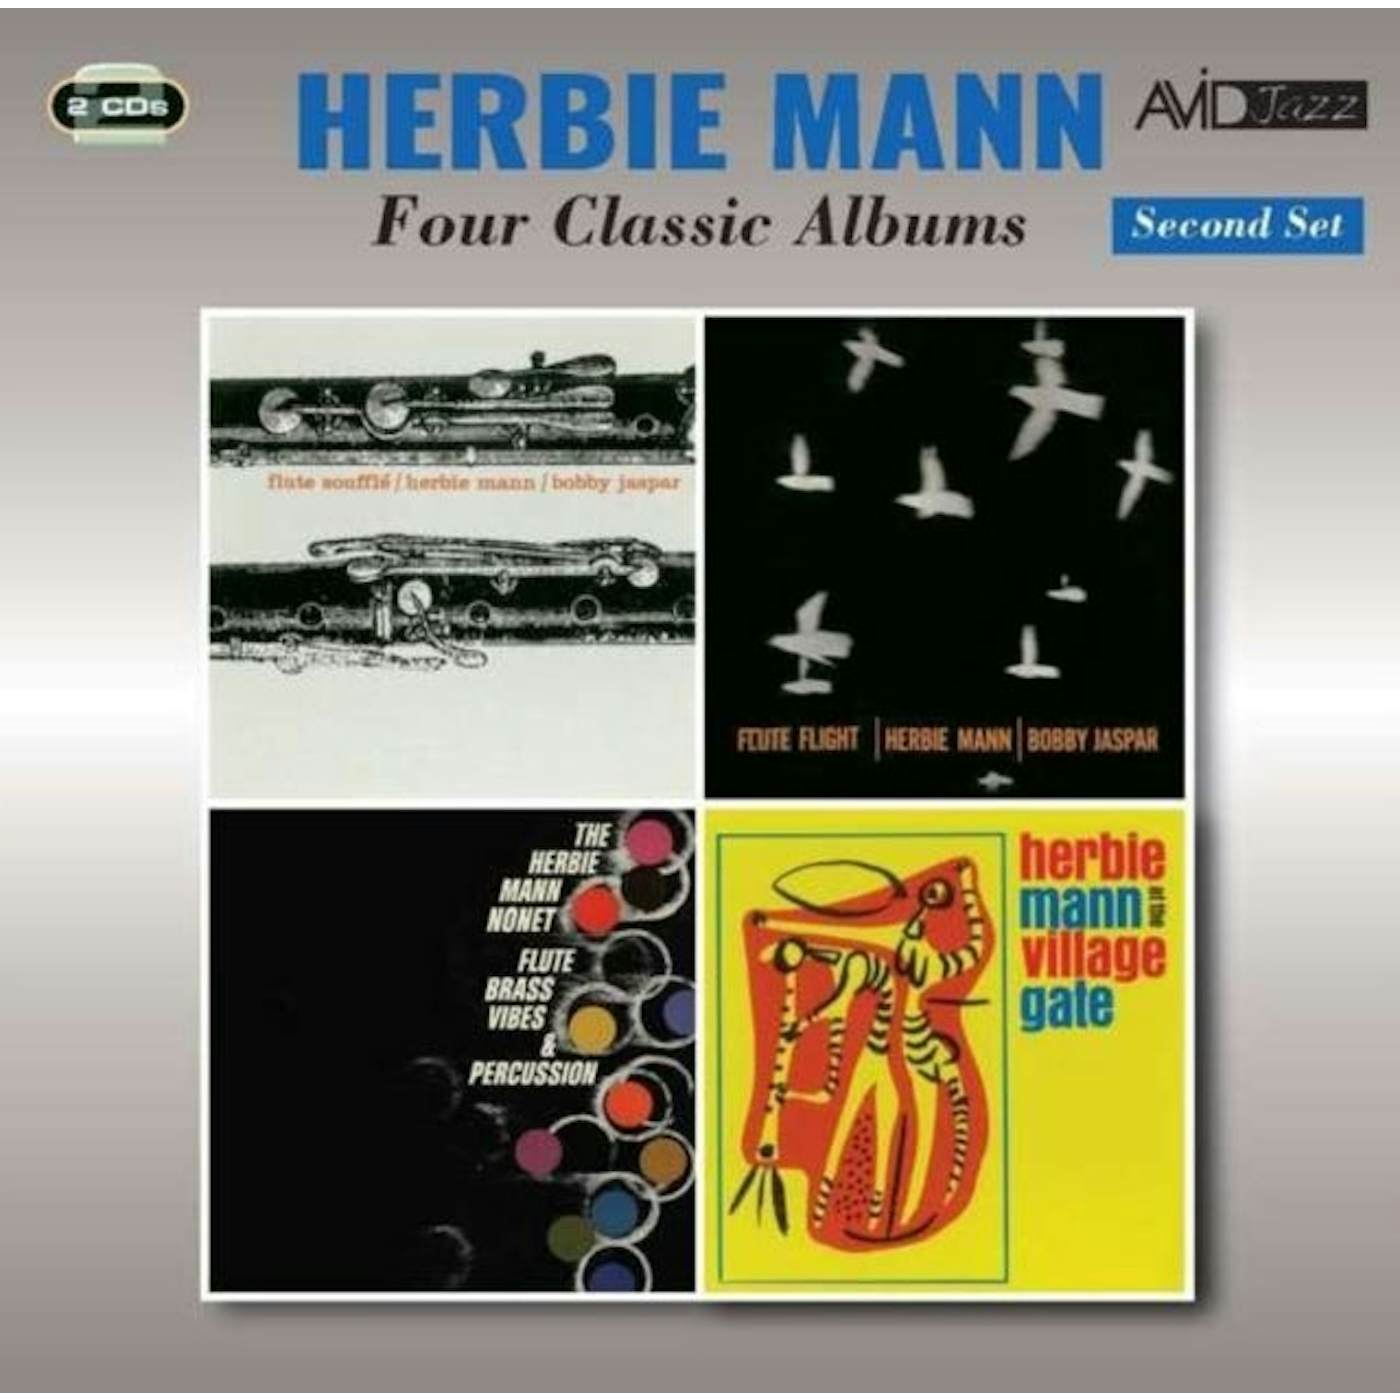 Herbie Mann CD - Four Classic Albums (Flute Souffle / Flute Flight / Flute. Brass. Vibes & Percussion / At The Village Gate)